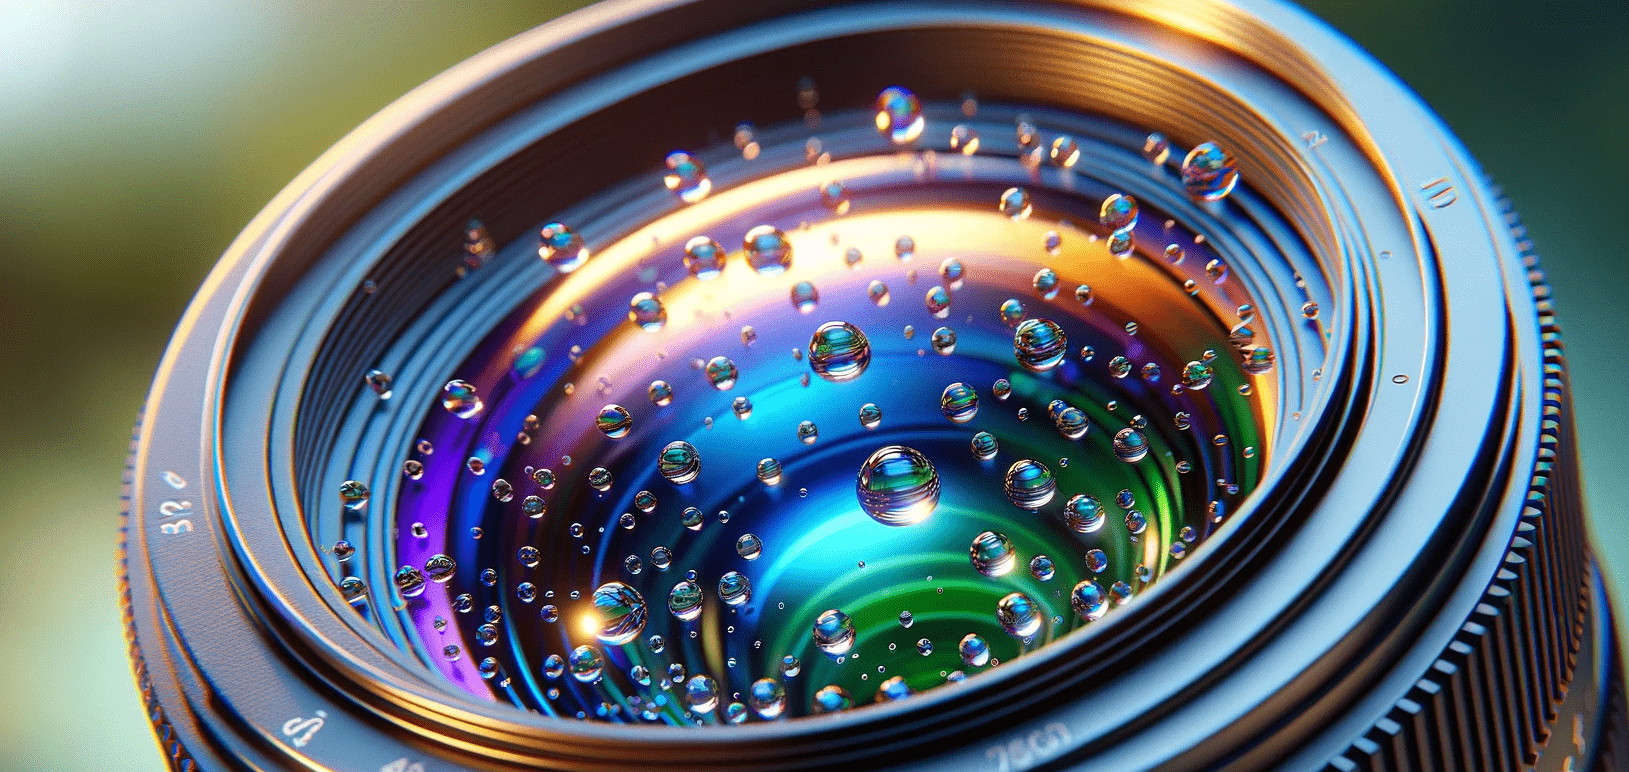 Anti-reflective lens coatings